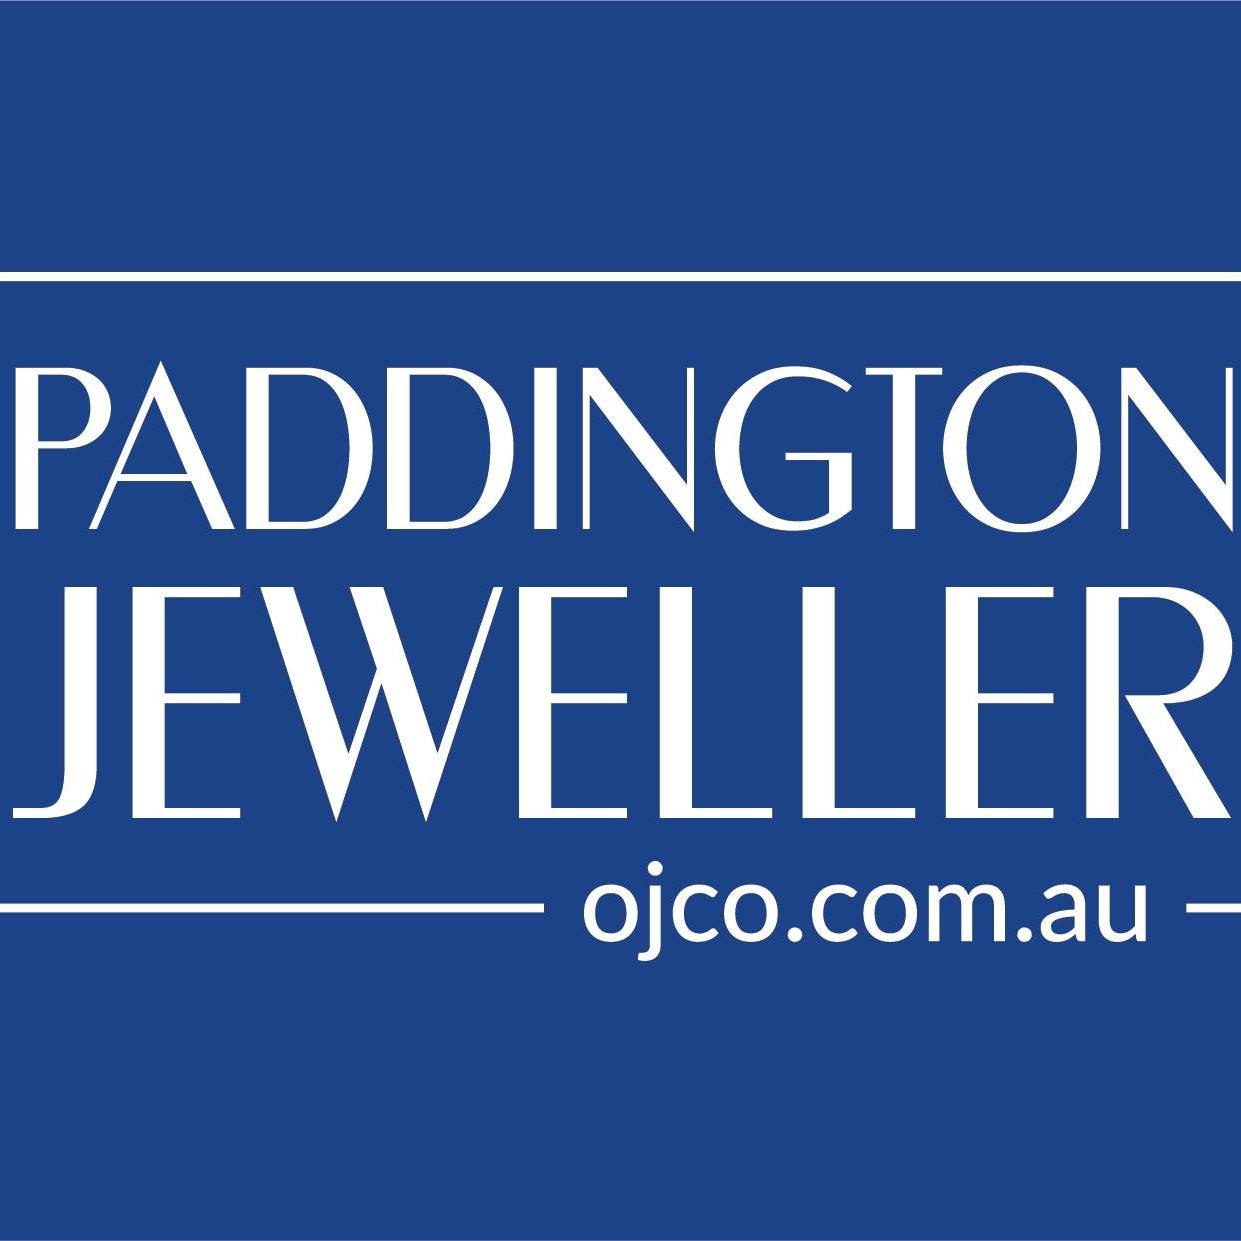 Company logo of Paddington Jeweller - The Online Jewellery Company